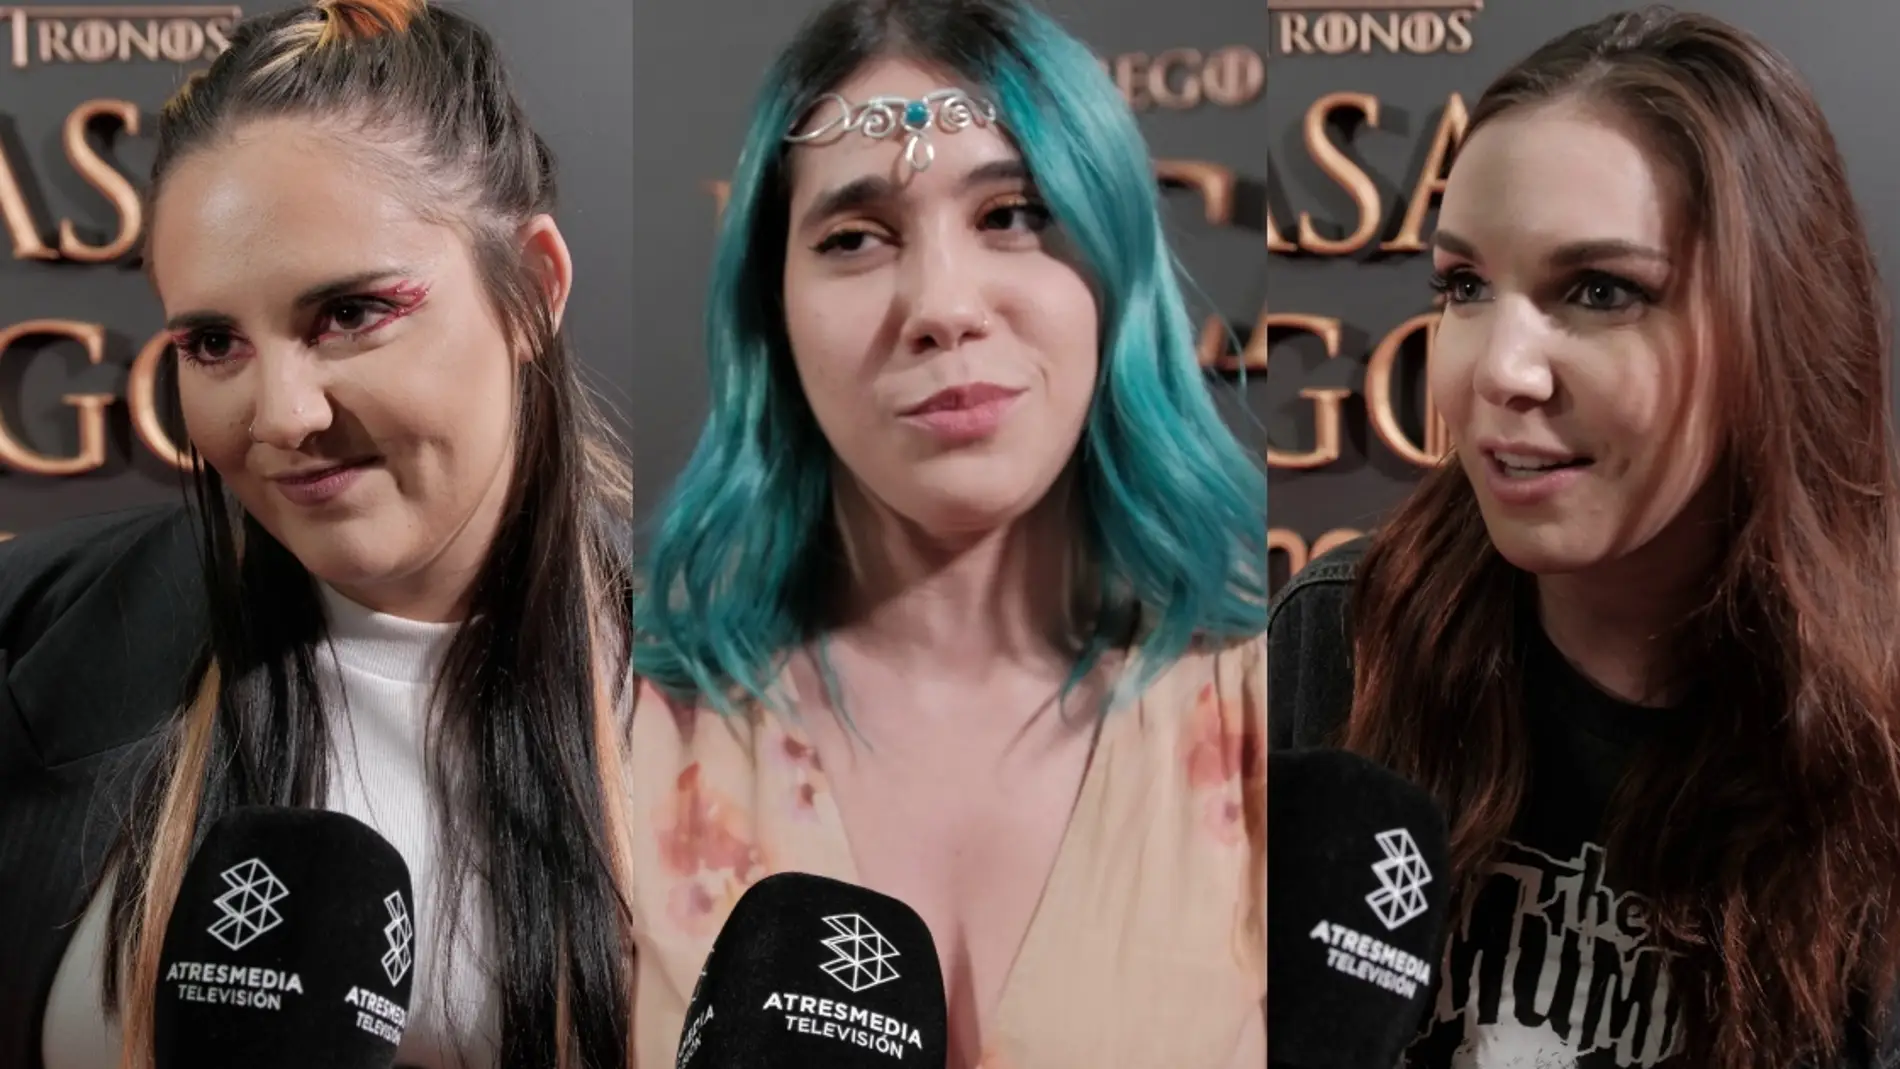 Herrejón, Andrea Compton e Inés Hernand en la premiere de 'La Casa del Dragón'